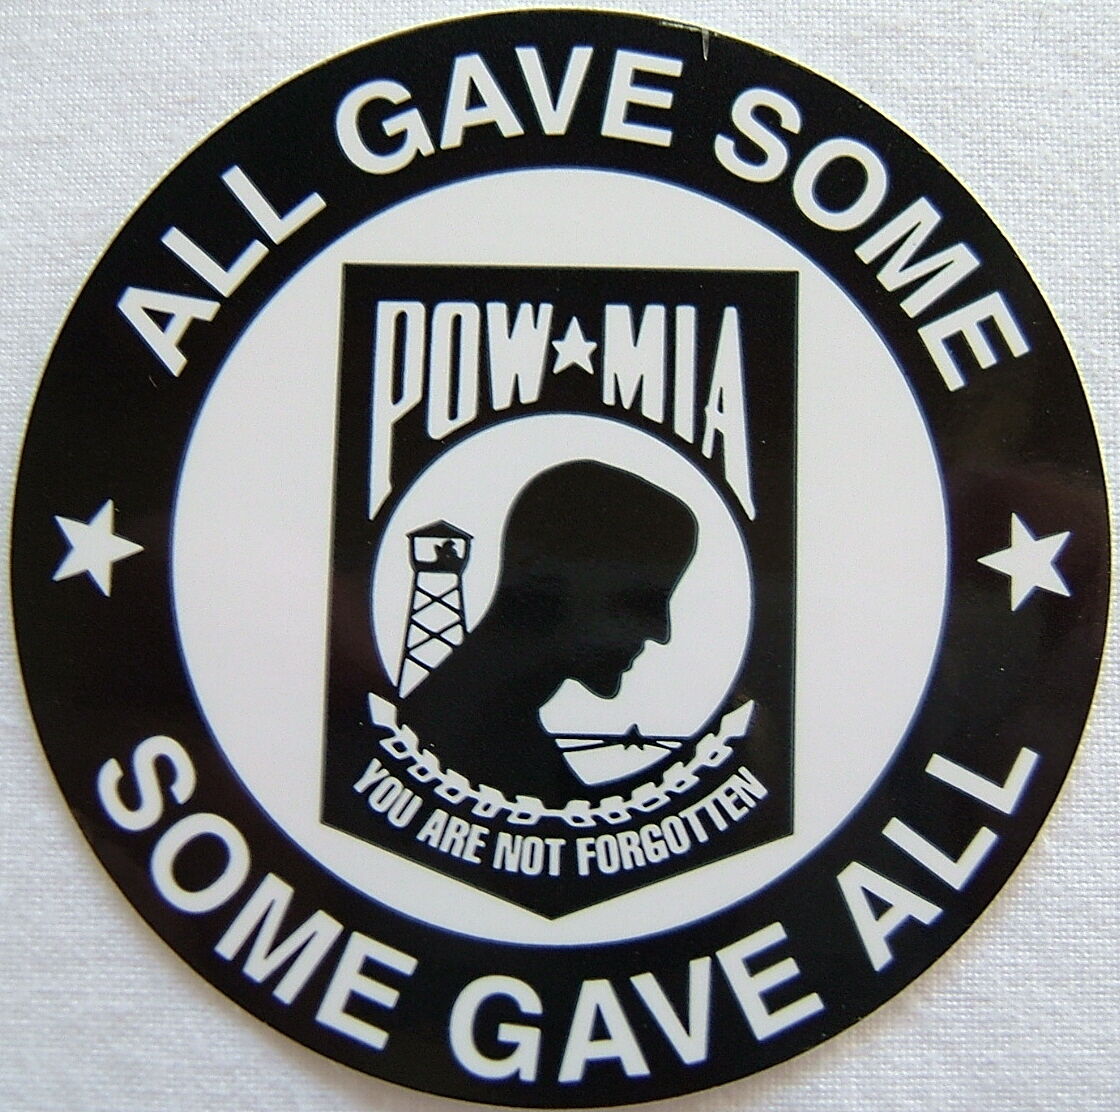 Helmet Sticker "pow/mia - All Gave Some - Some Gave All" Round Sticker, #f1169